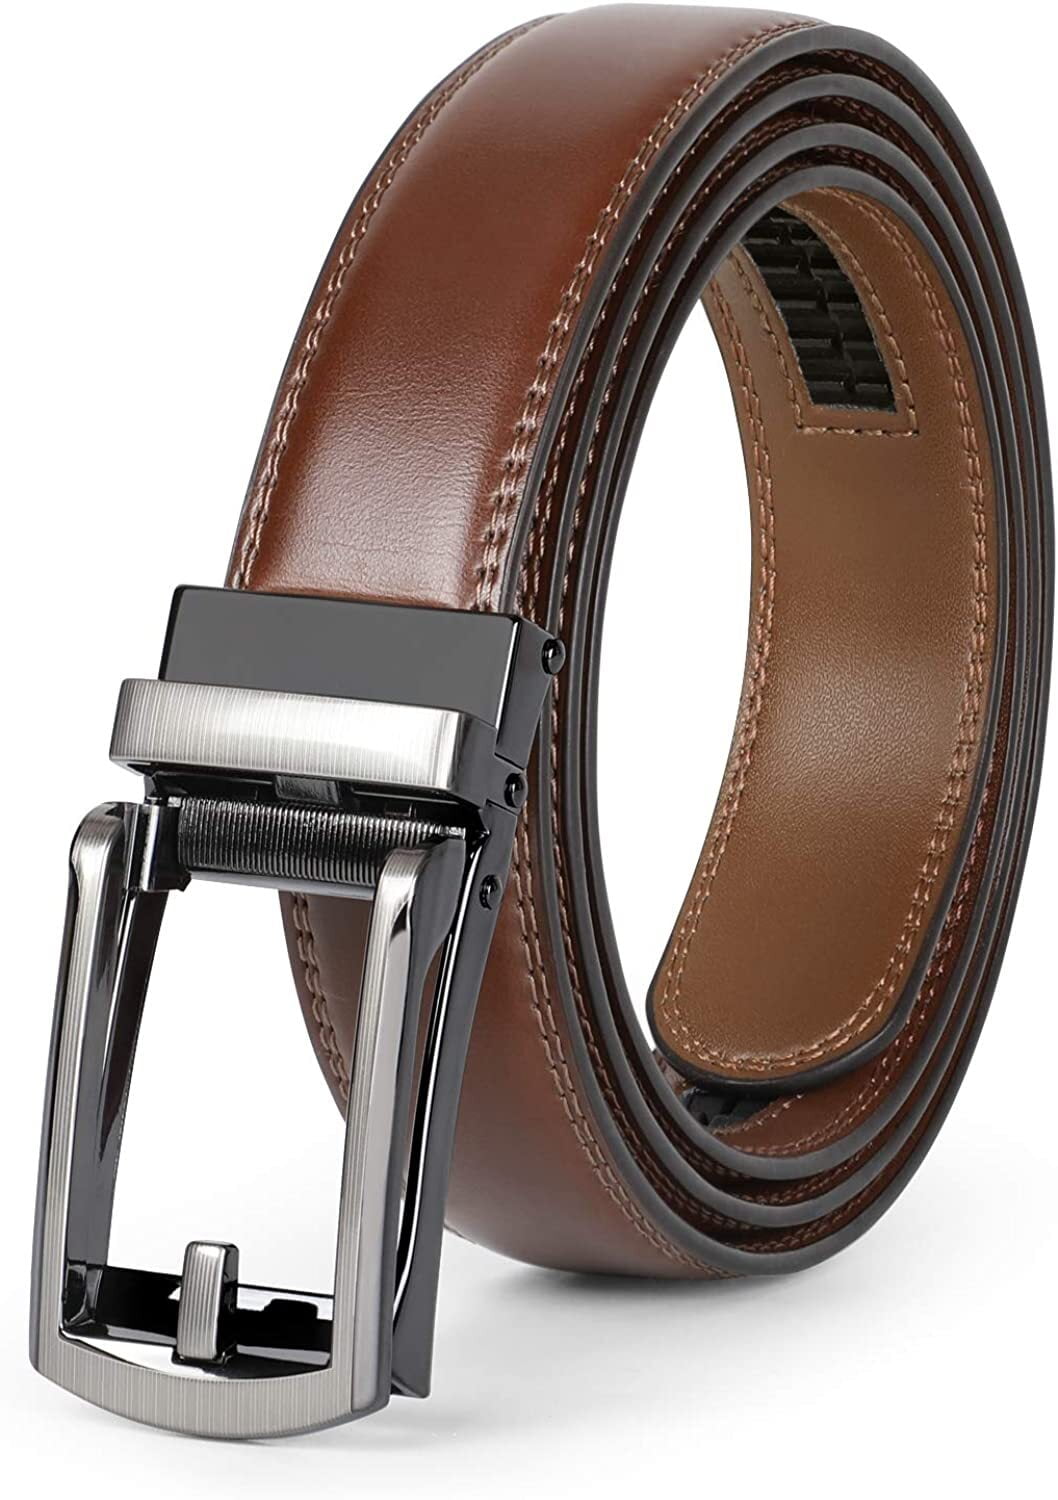 WHIPPY Men's Ratchet Belt, Leather Dress Belt, Trim to Fit - Walmart.com